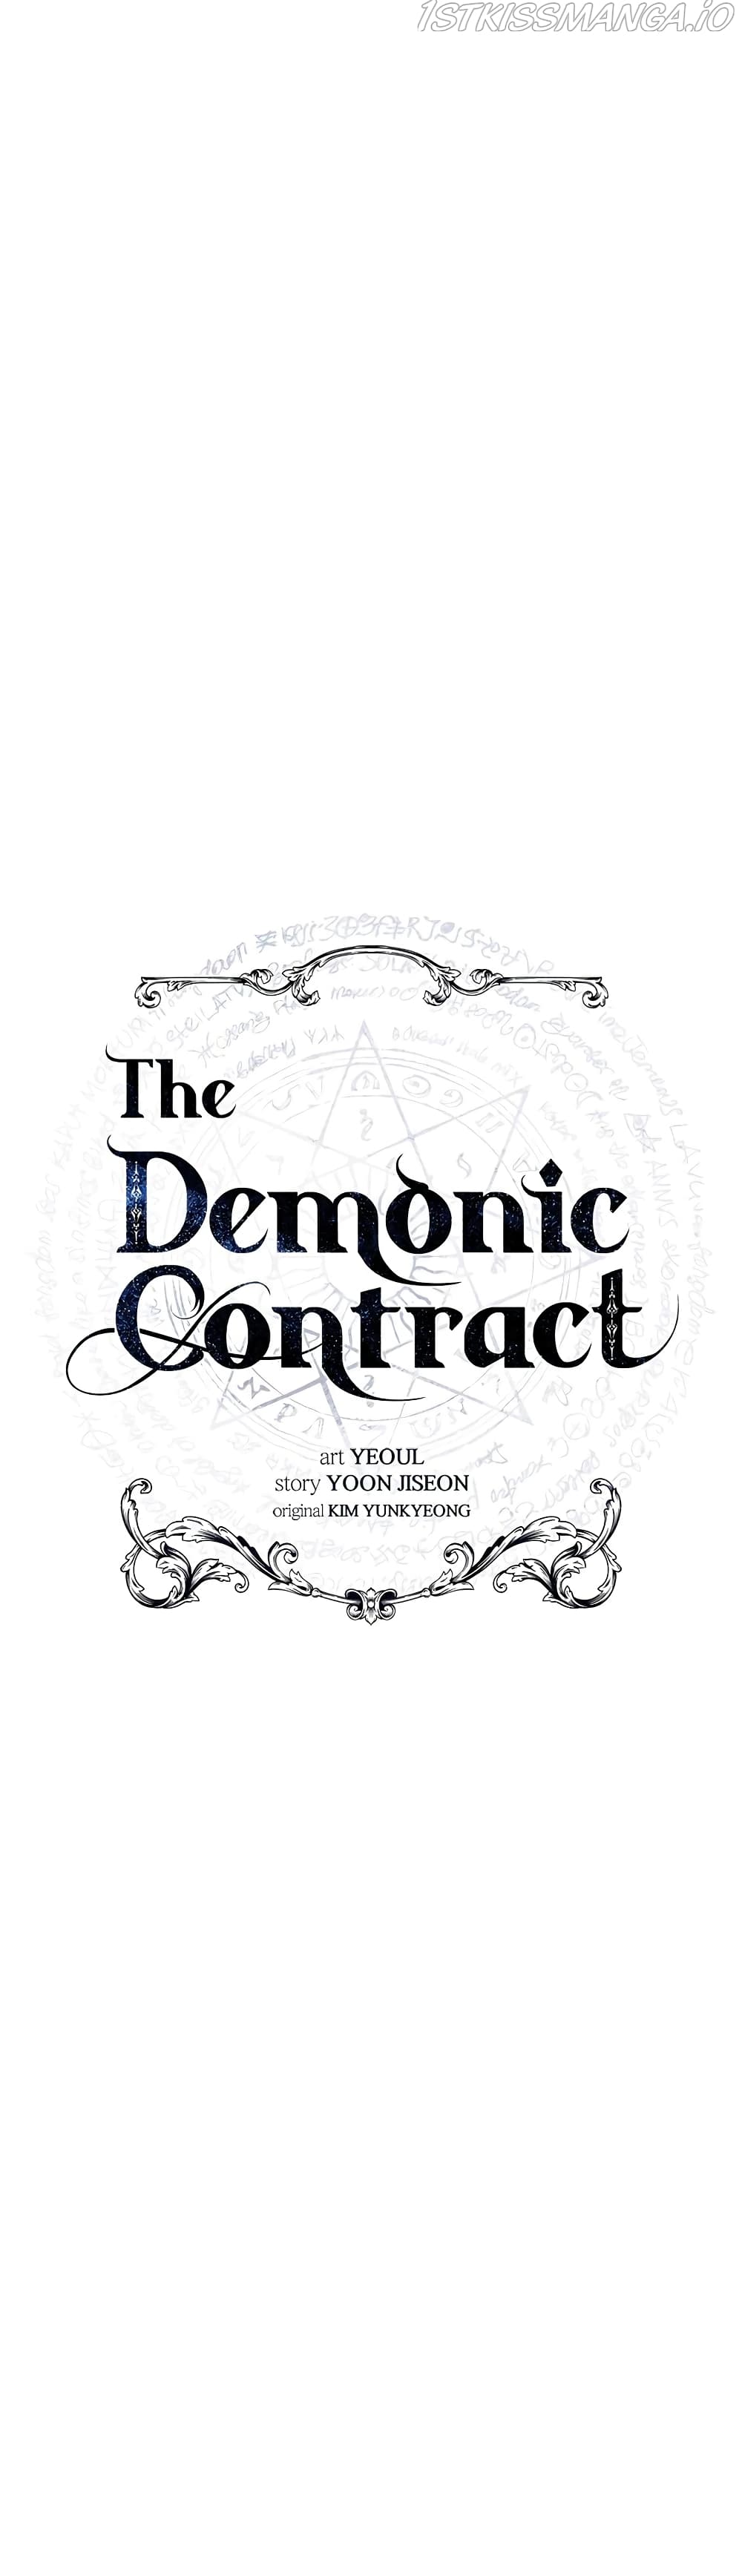 The Demonic Contract 56-56